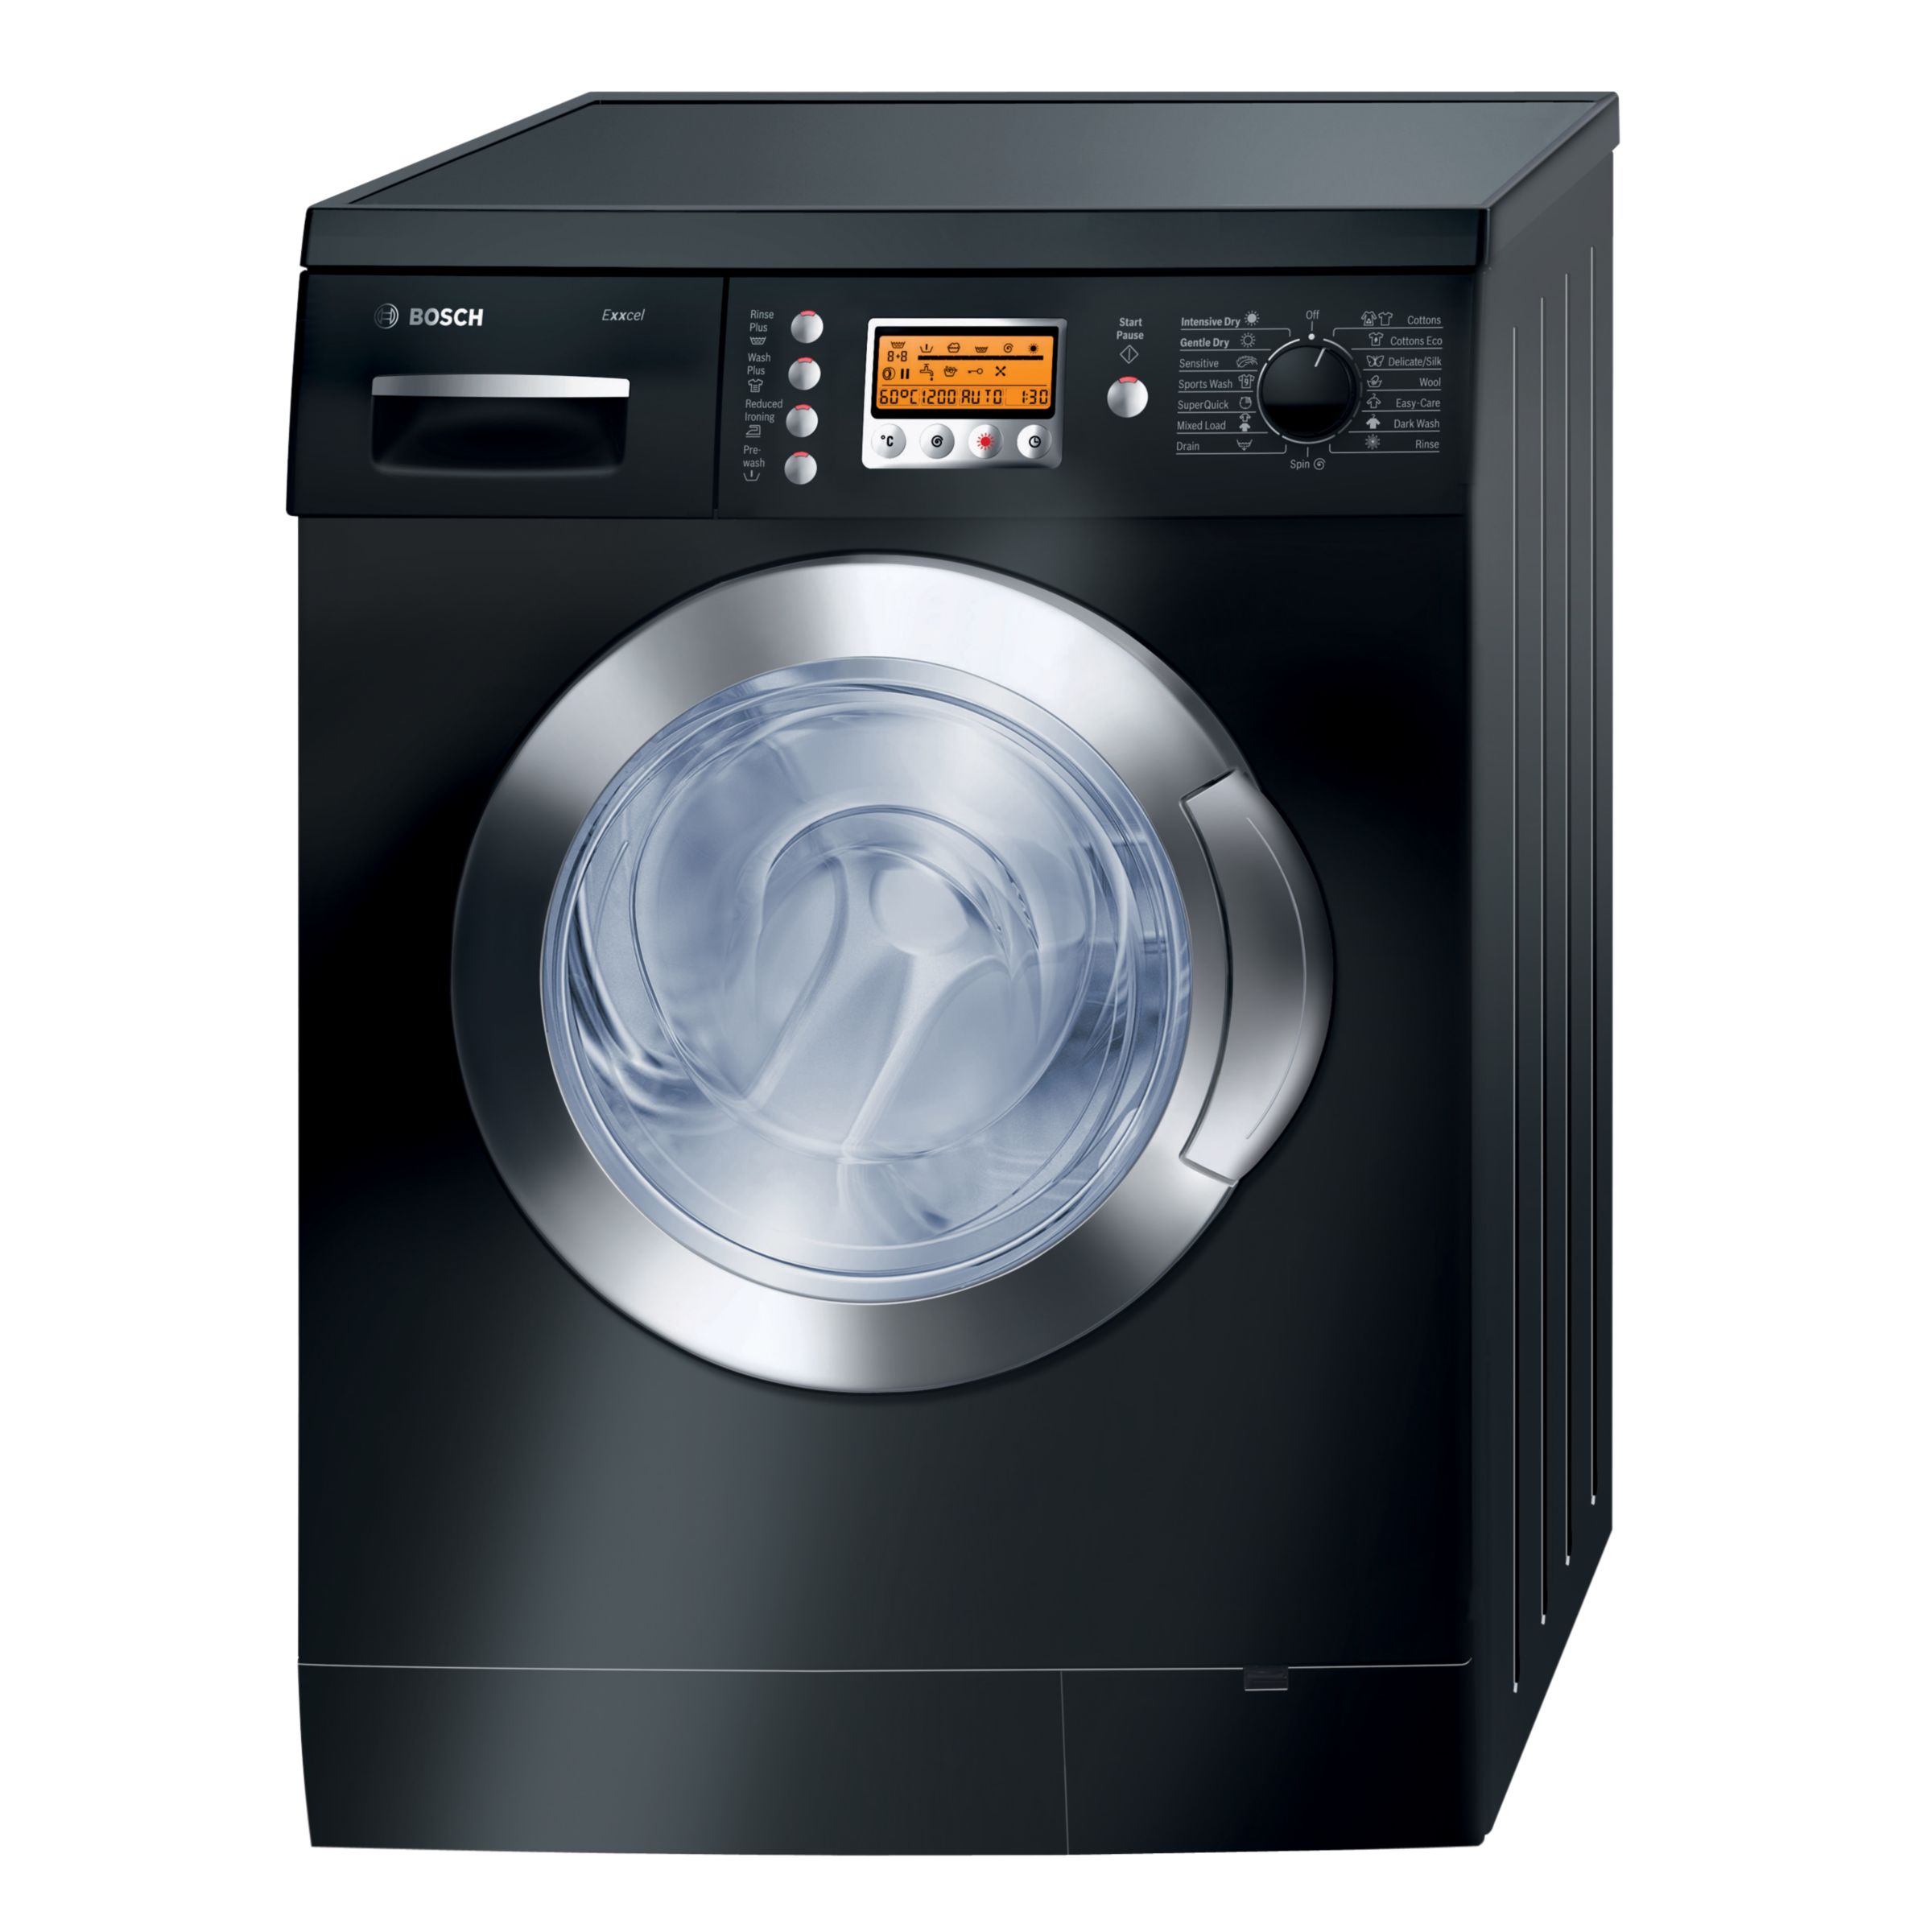 Bosch Exxcel WVD2452BGB Washer Dryer, Black at JohnLewis